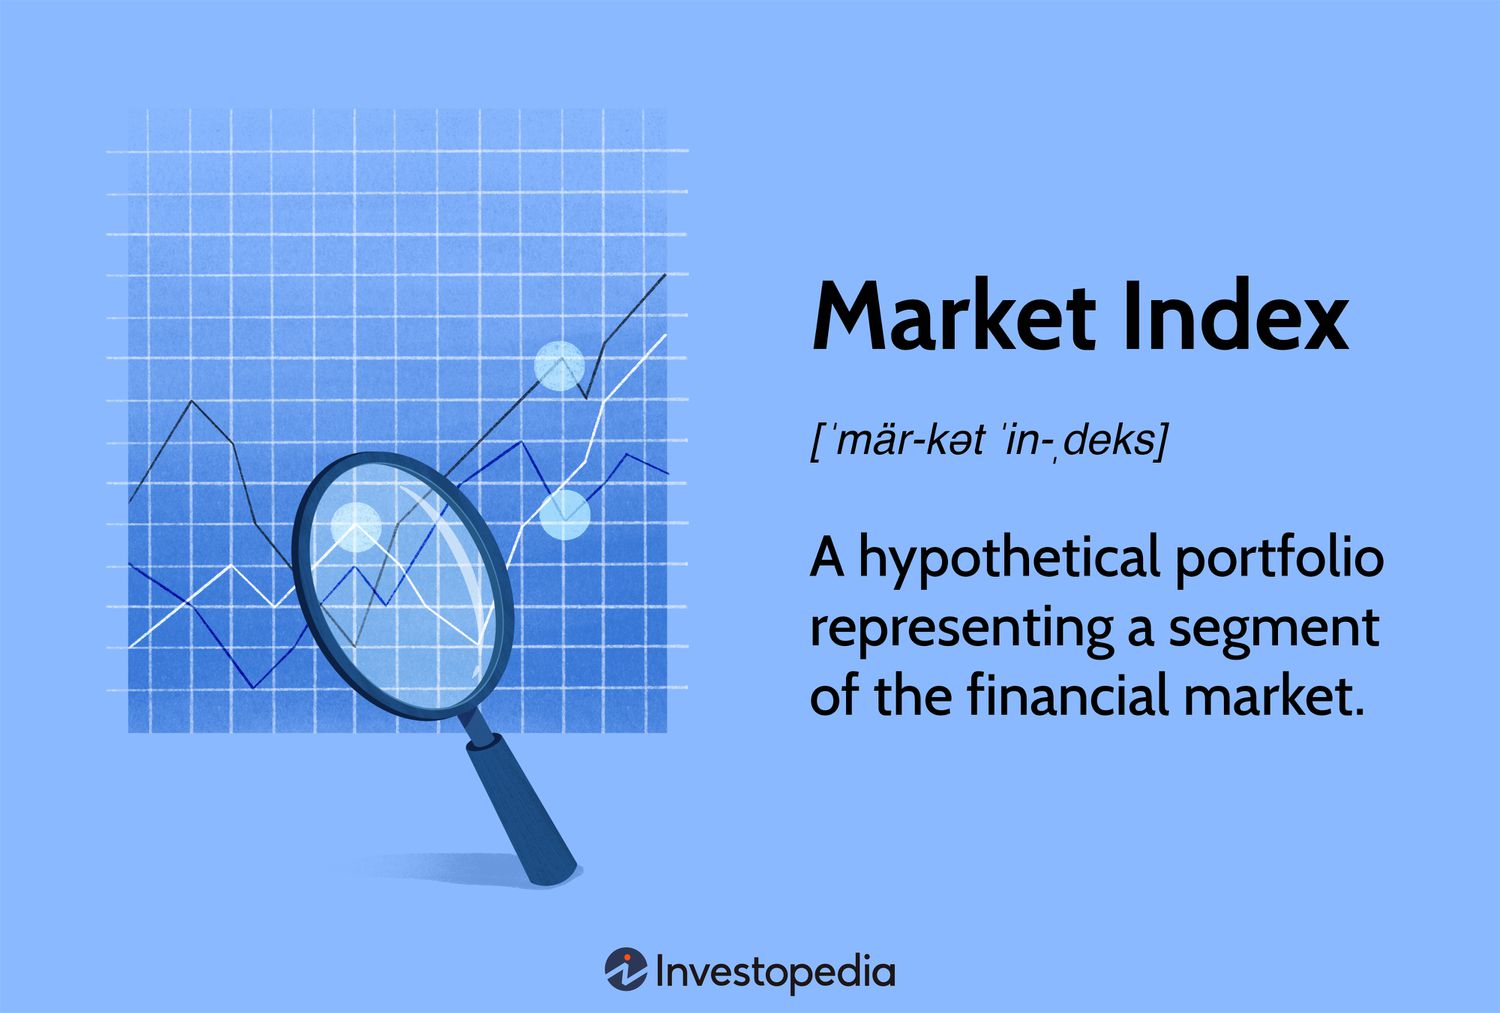 Market Index: A hypothetical portfolio representing a segment of the financial market.